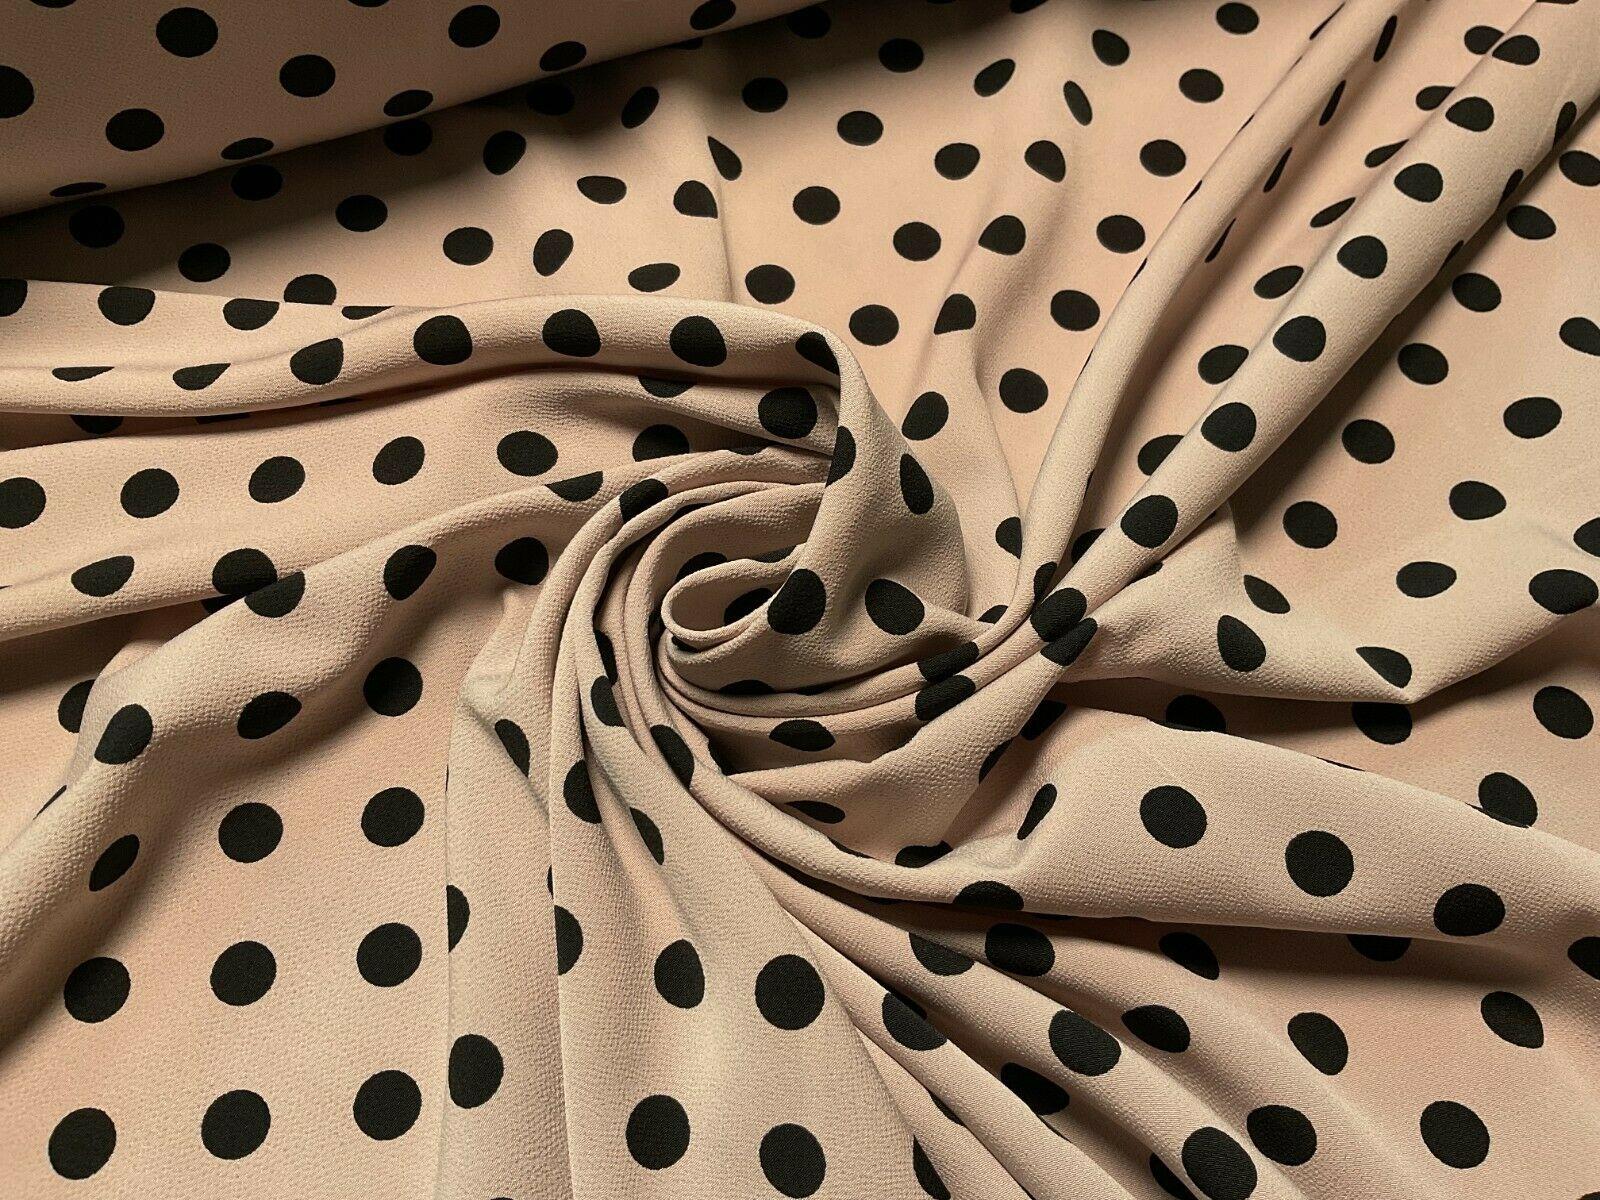 Koshibo Crepe De Chine Polka dot spot Printed Dress fabric 147 cm M1601